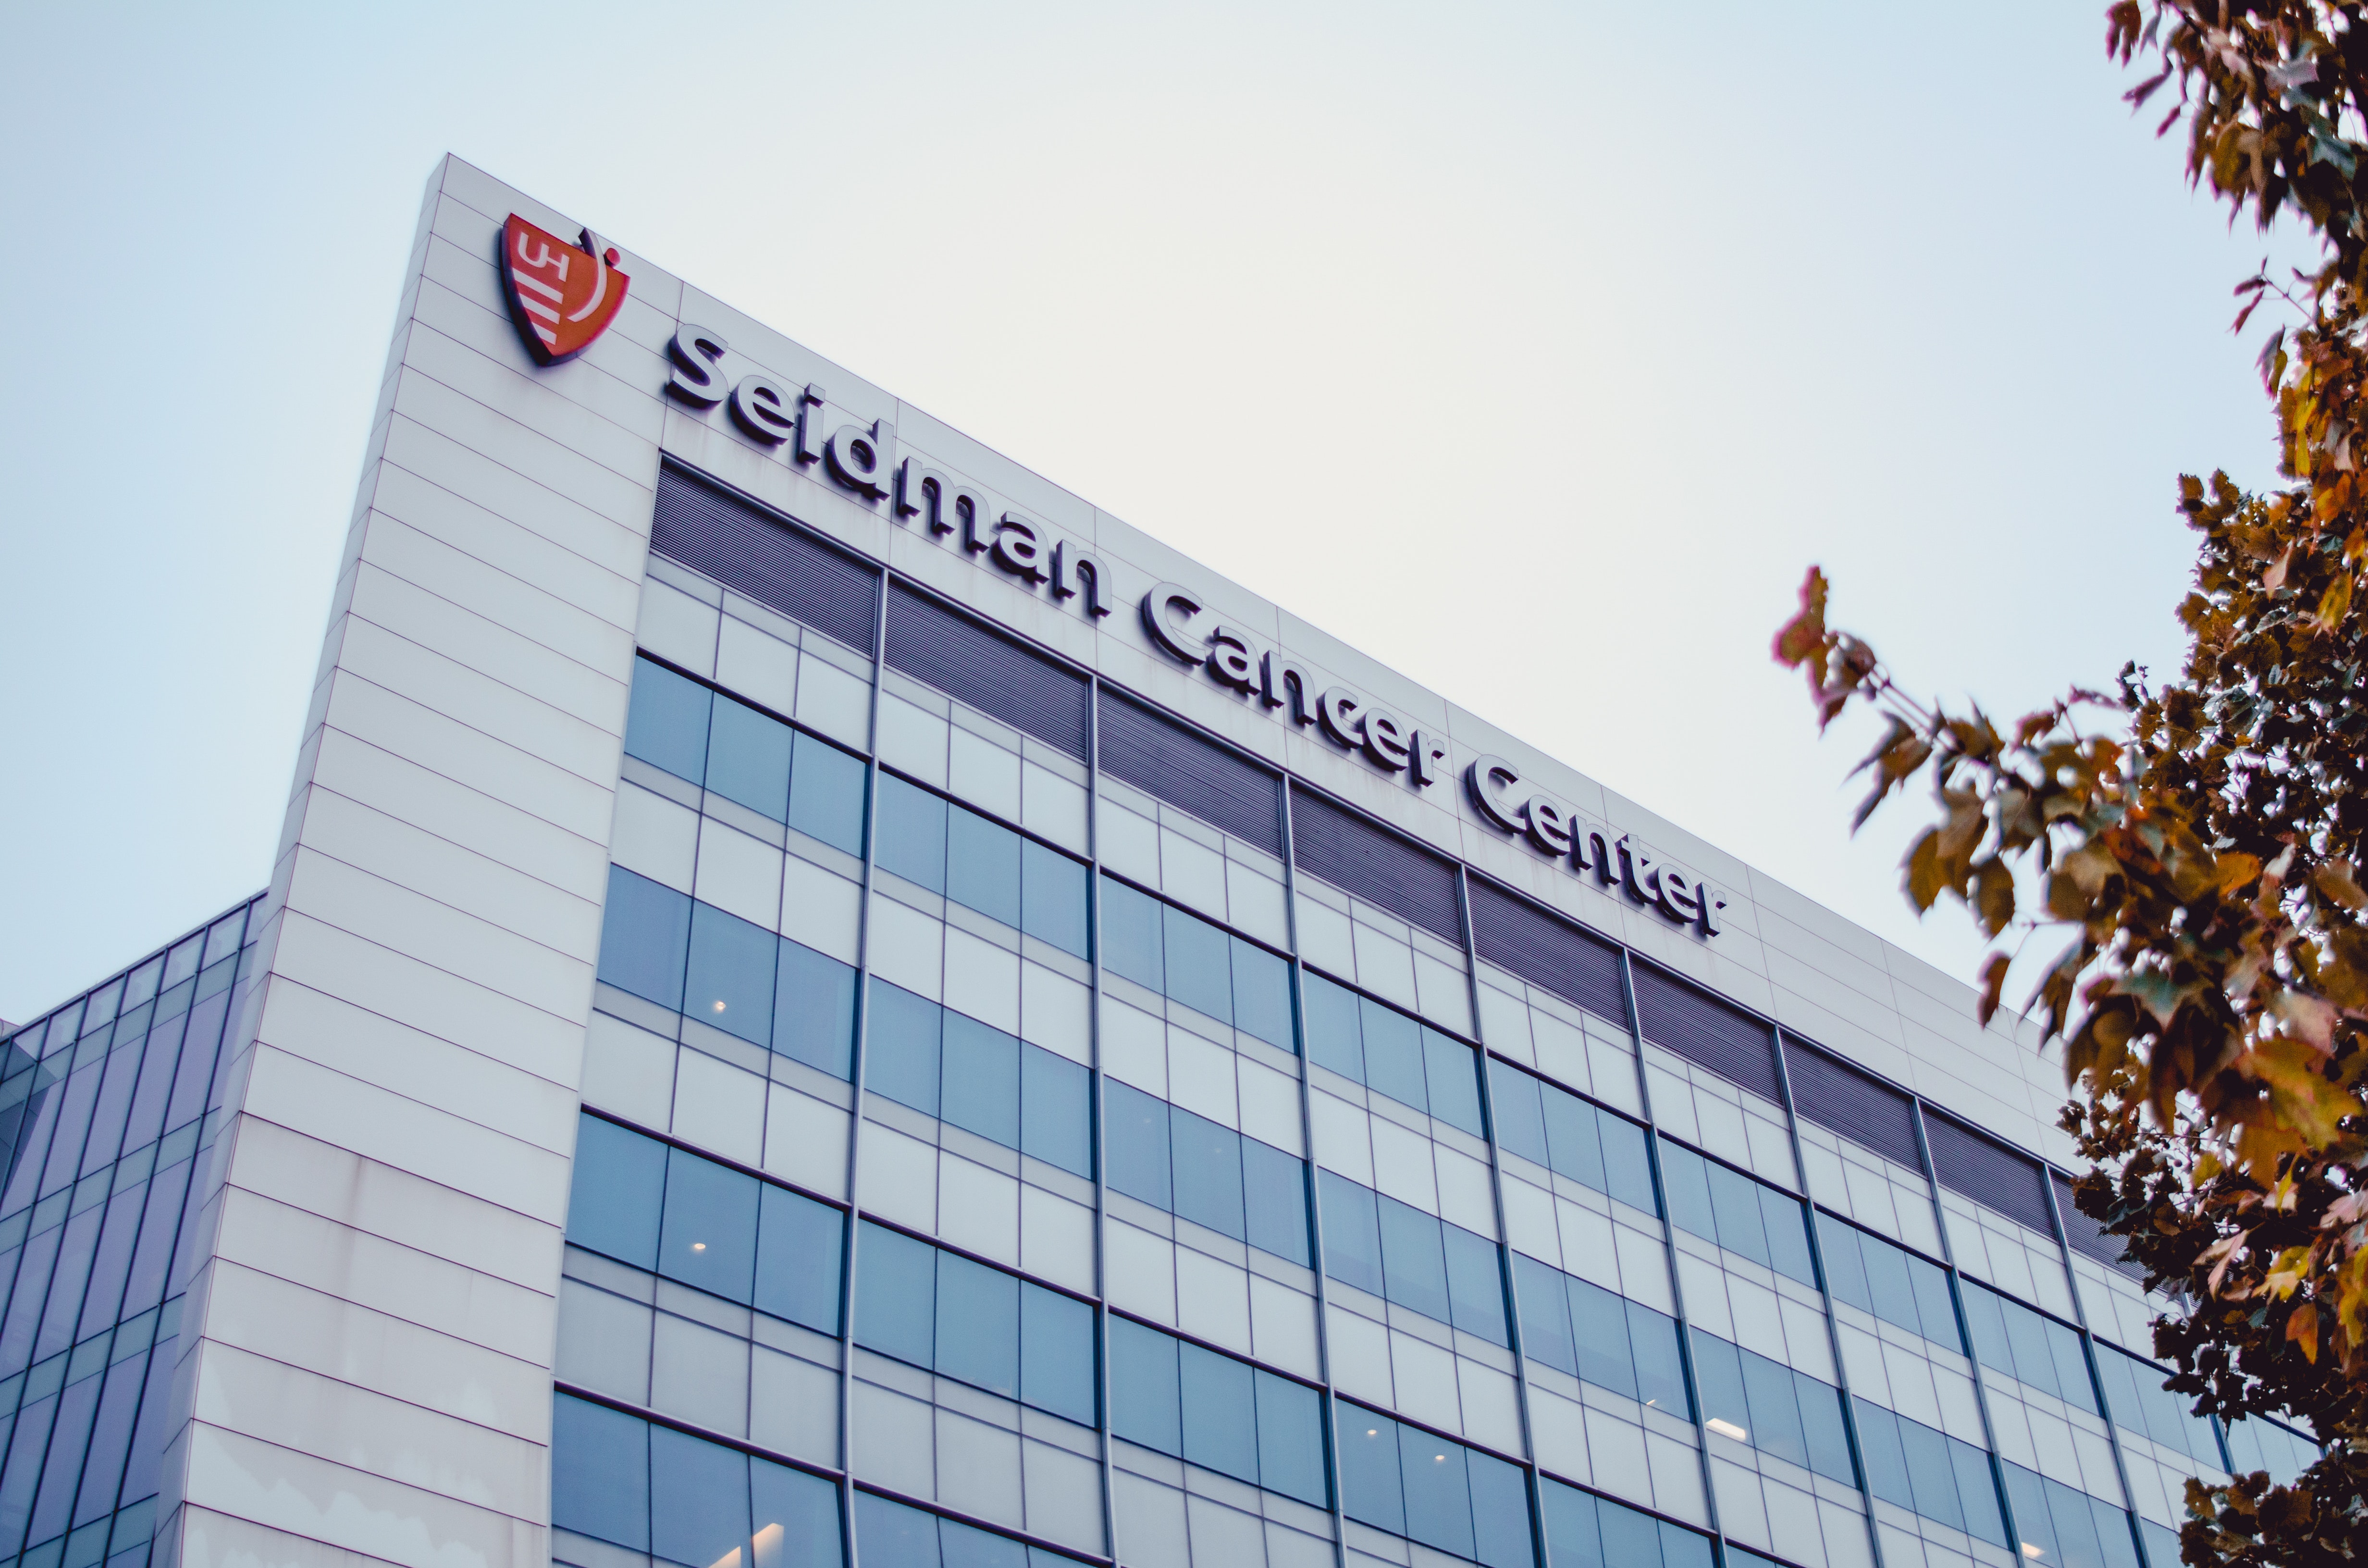 Seidman cancer center building at daytime photo